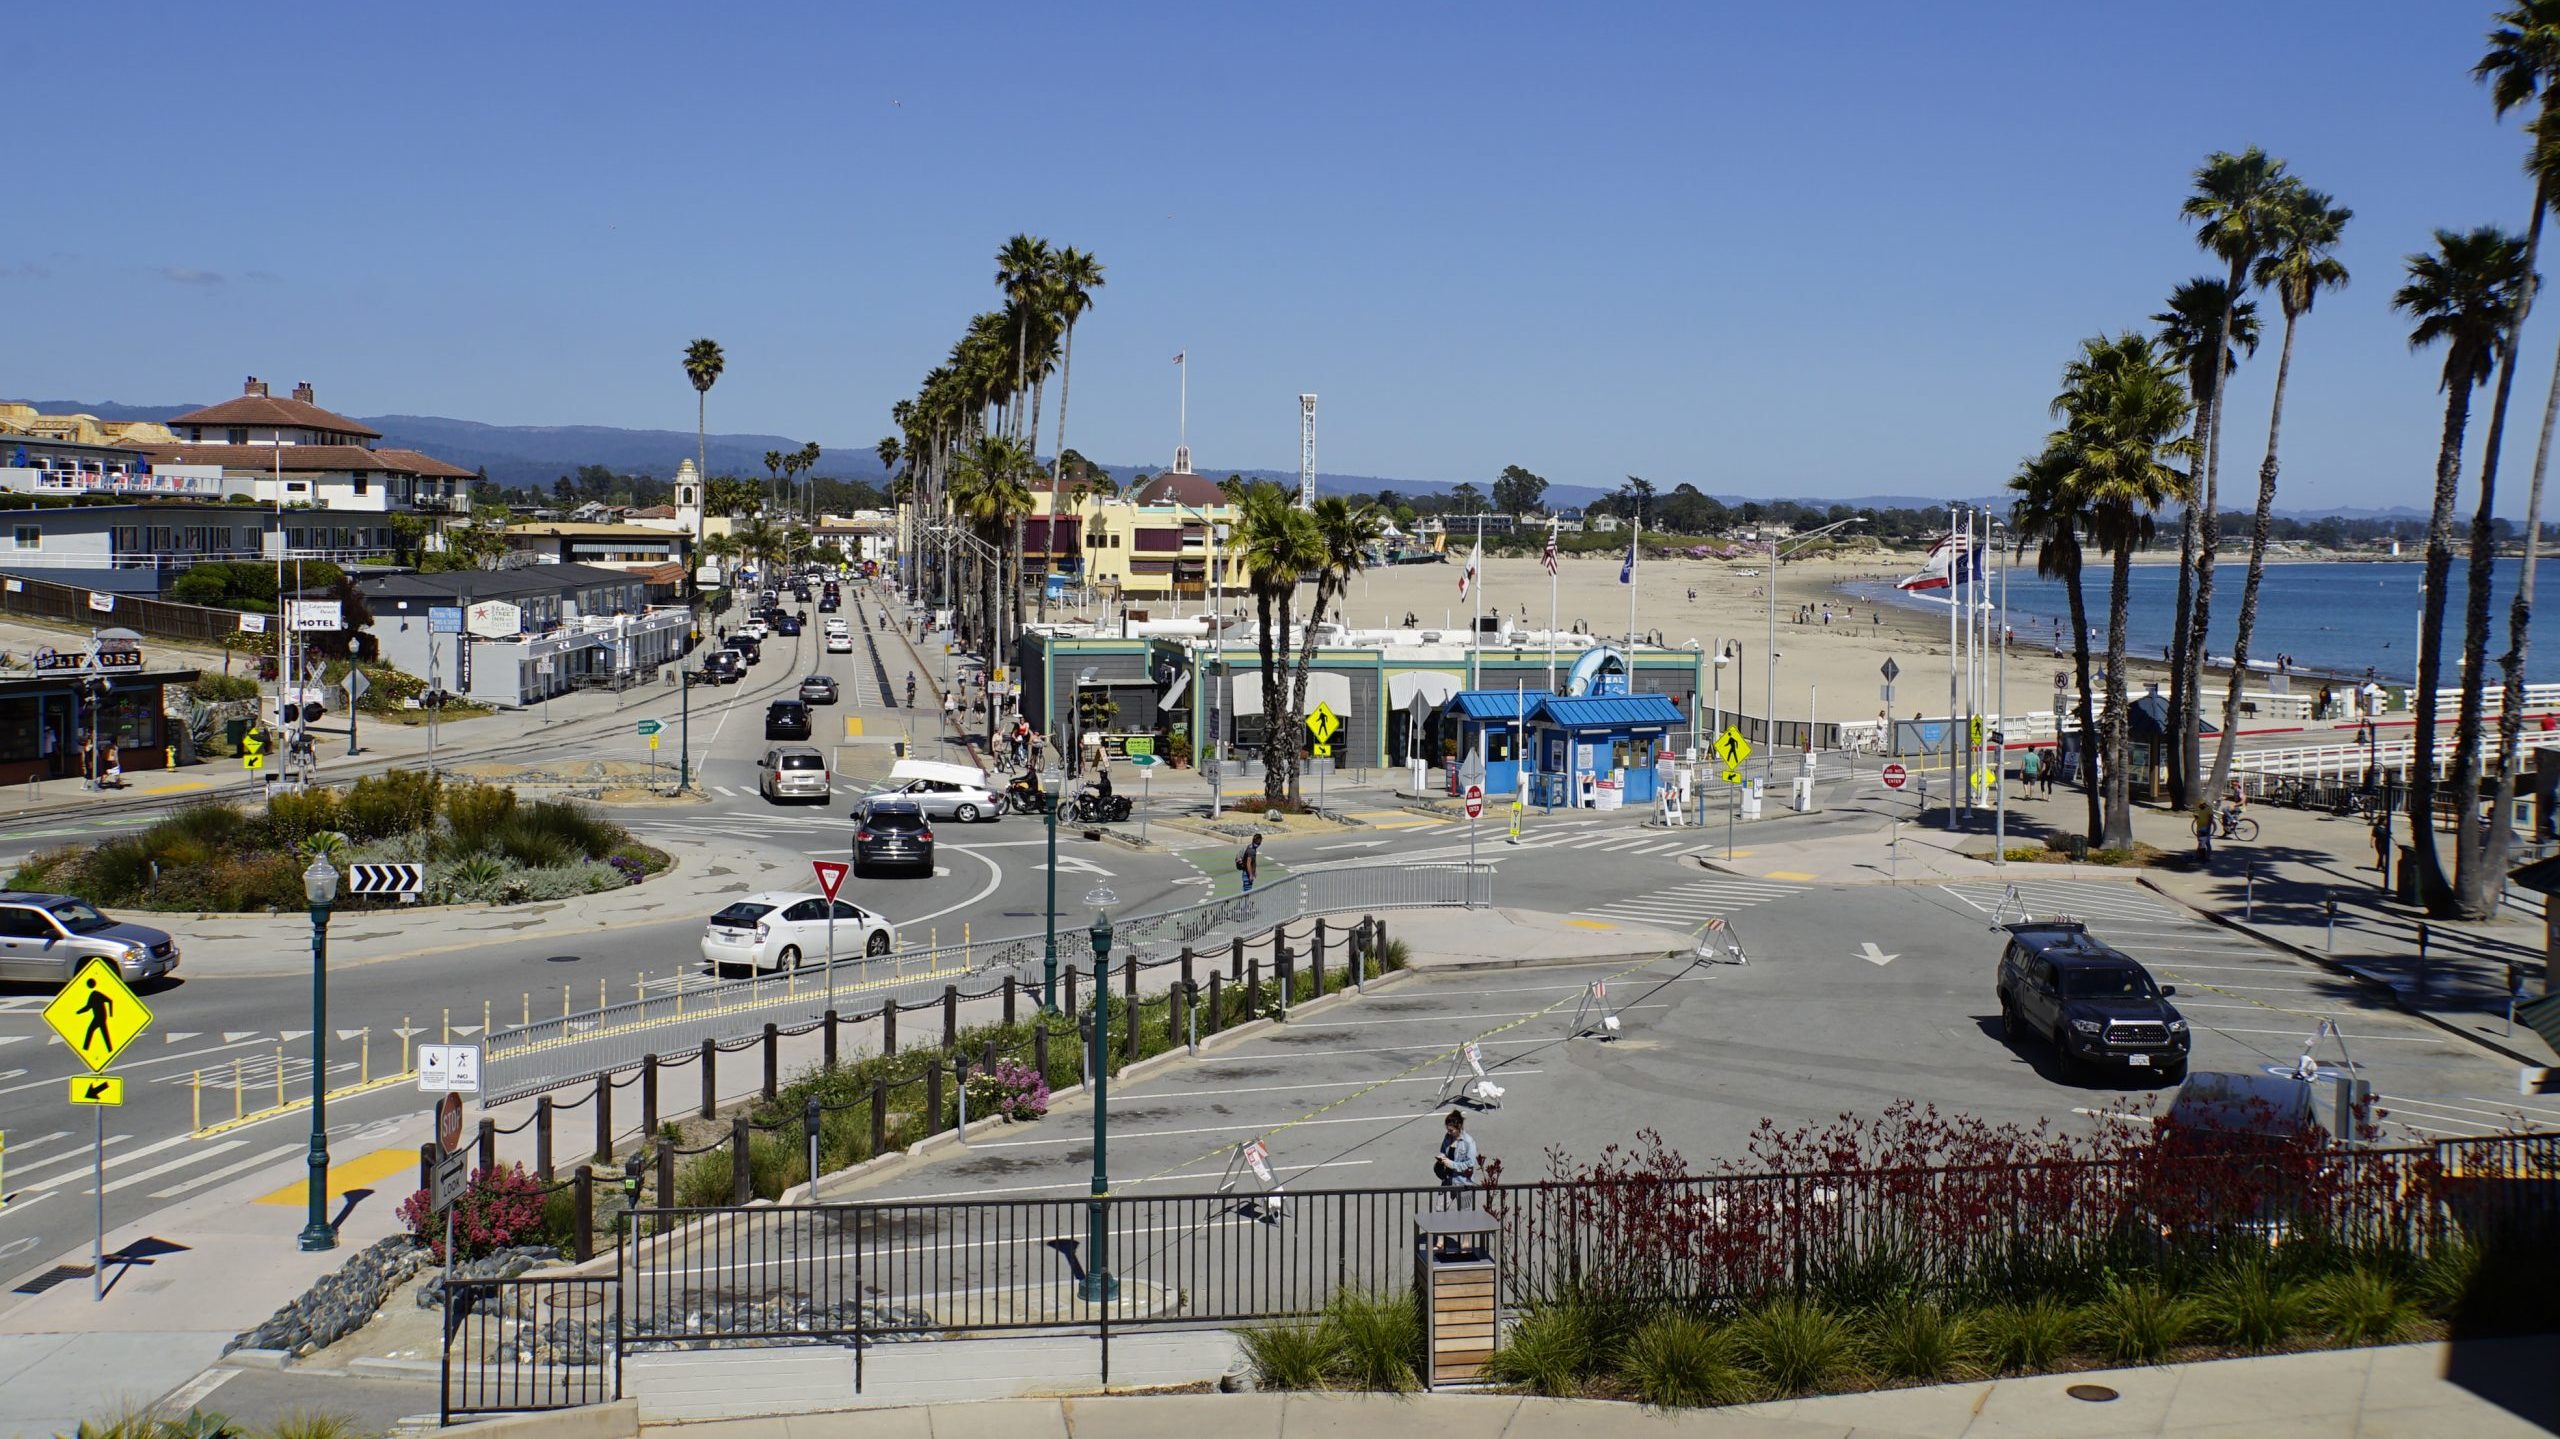 Beach Street in Santa Cruz